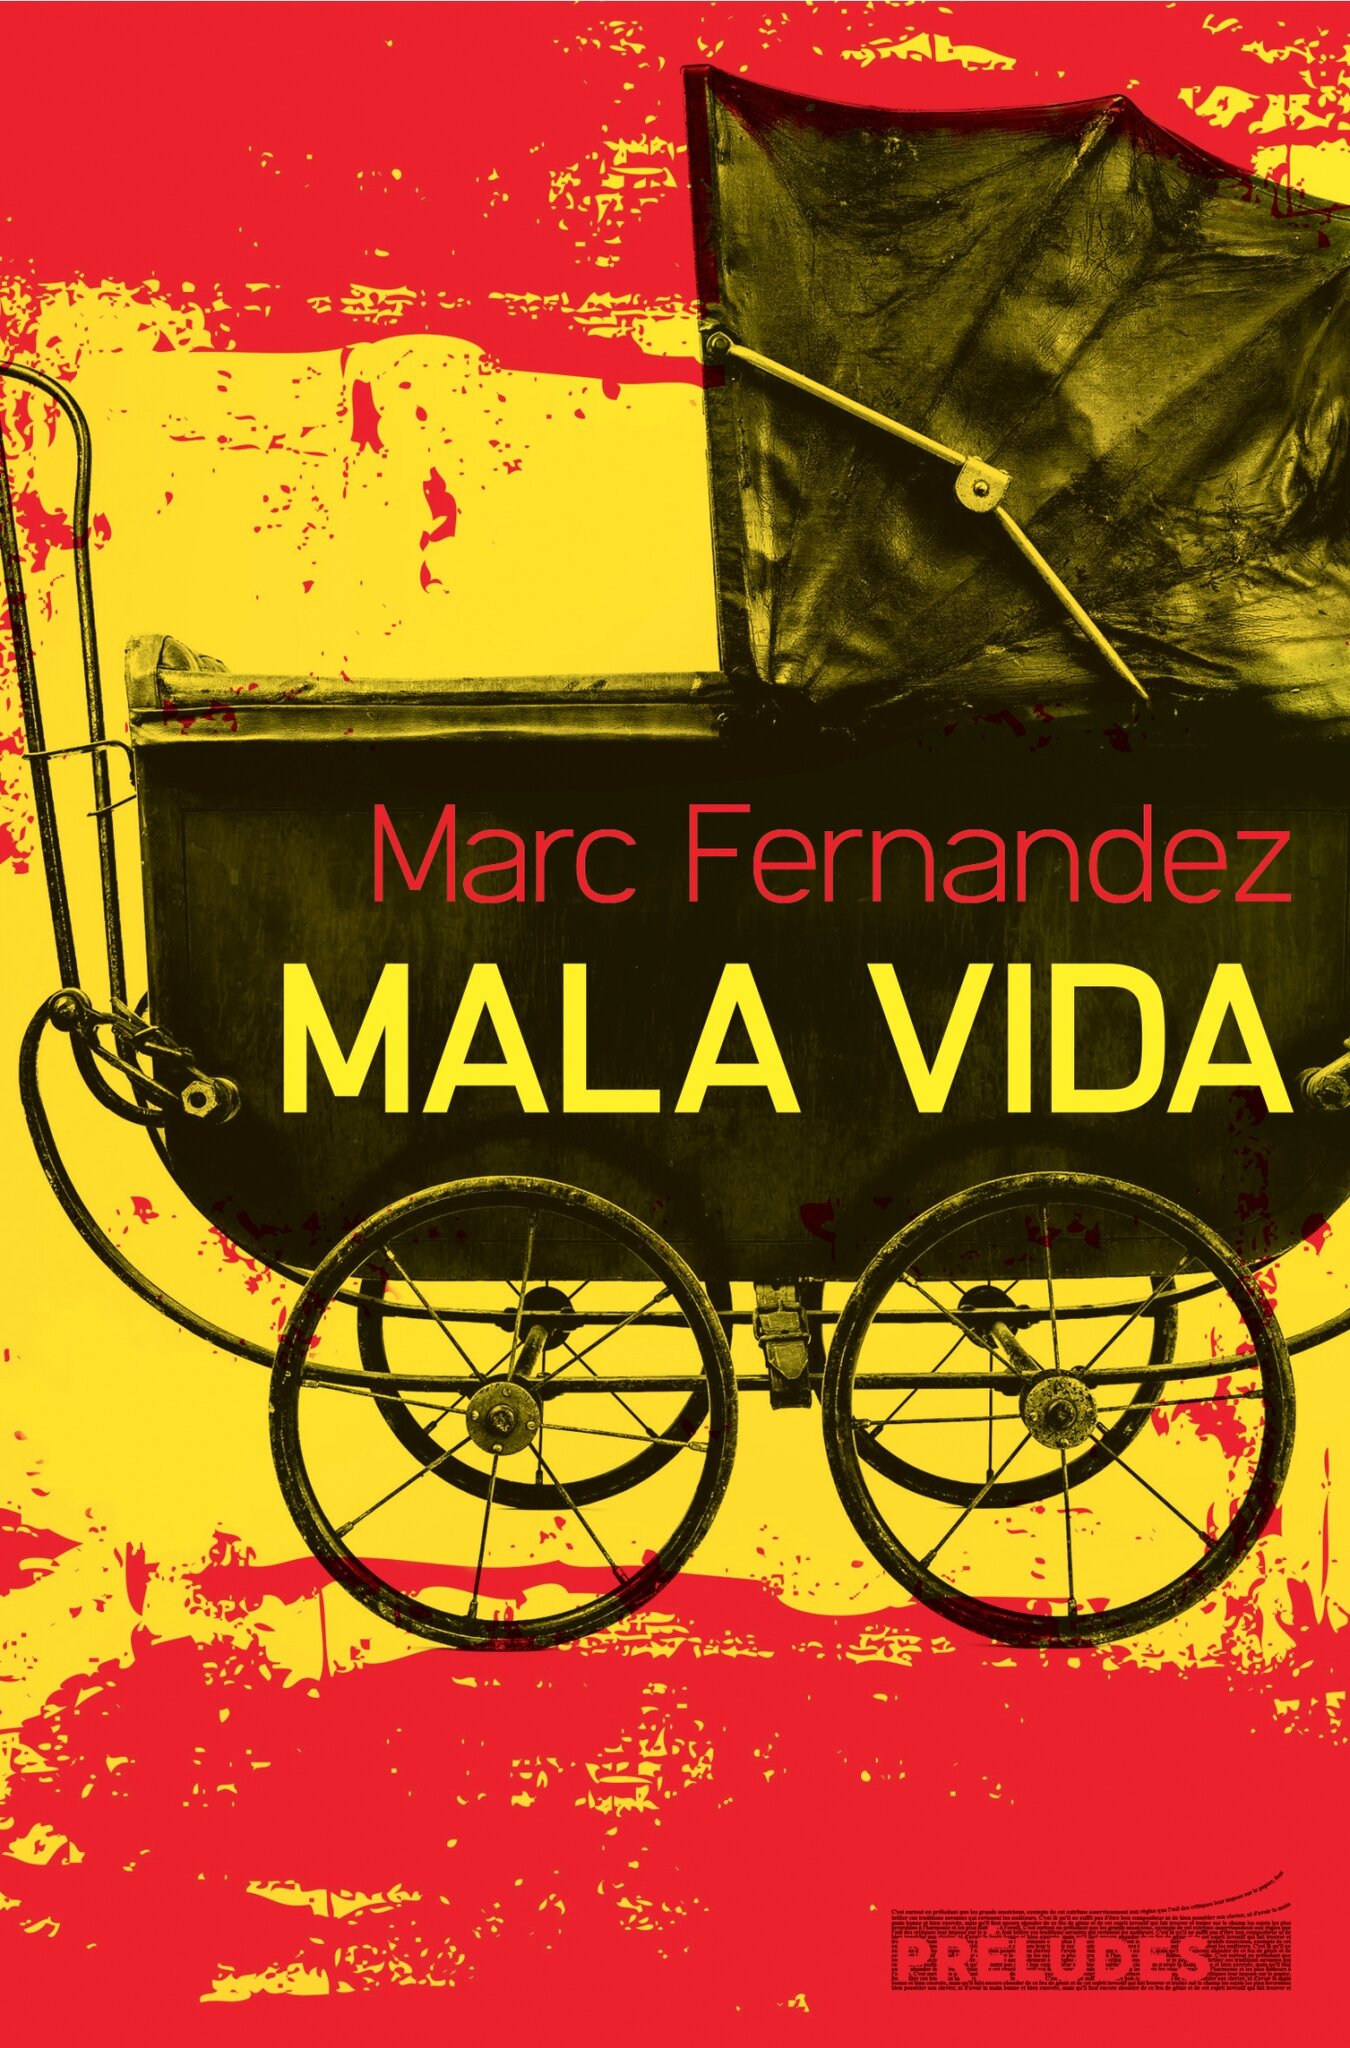 Marc Fernandez - Mala Vida